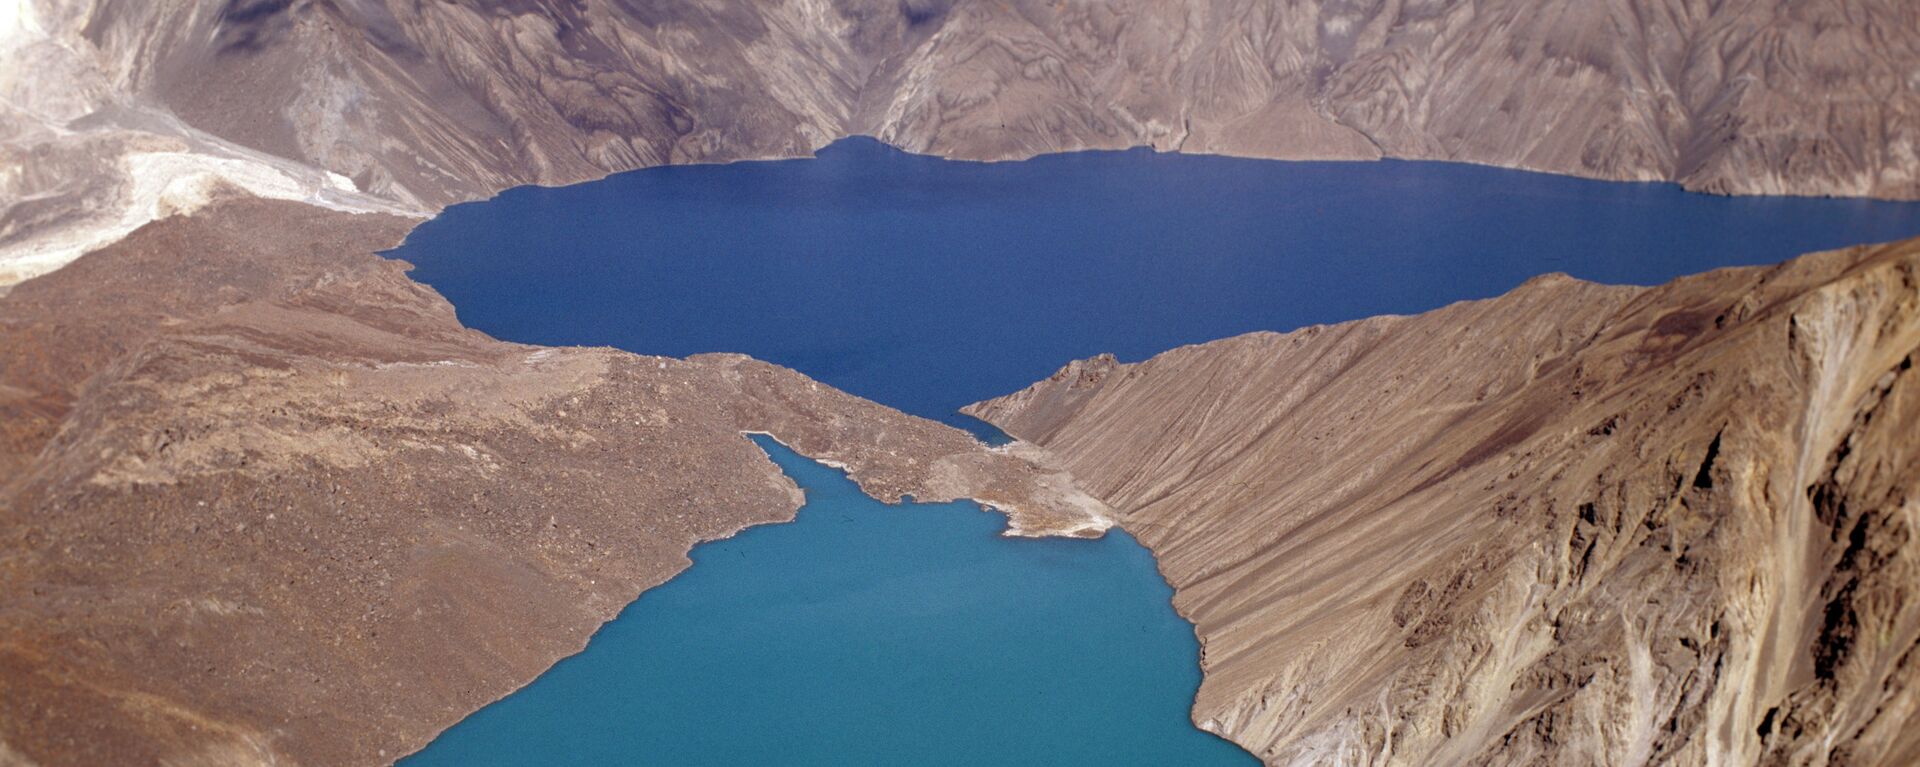 Сарезское озеро - Sputnik Таджикистан, 1920, 11.02.2021